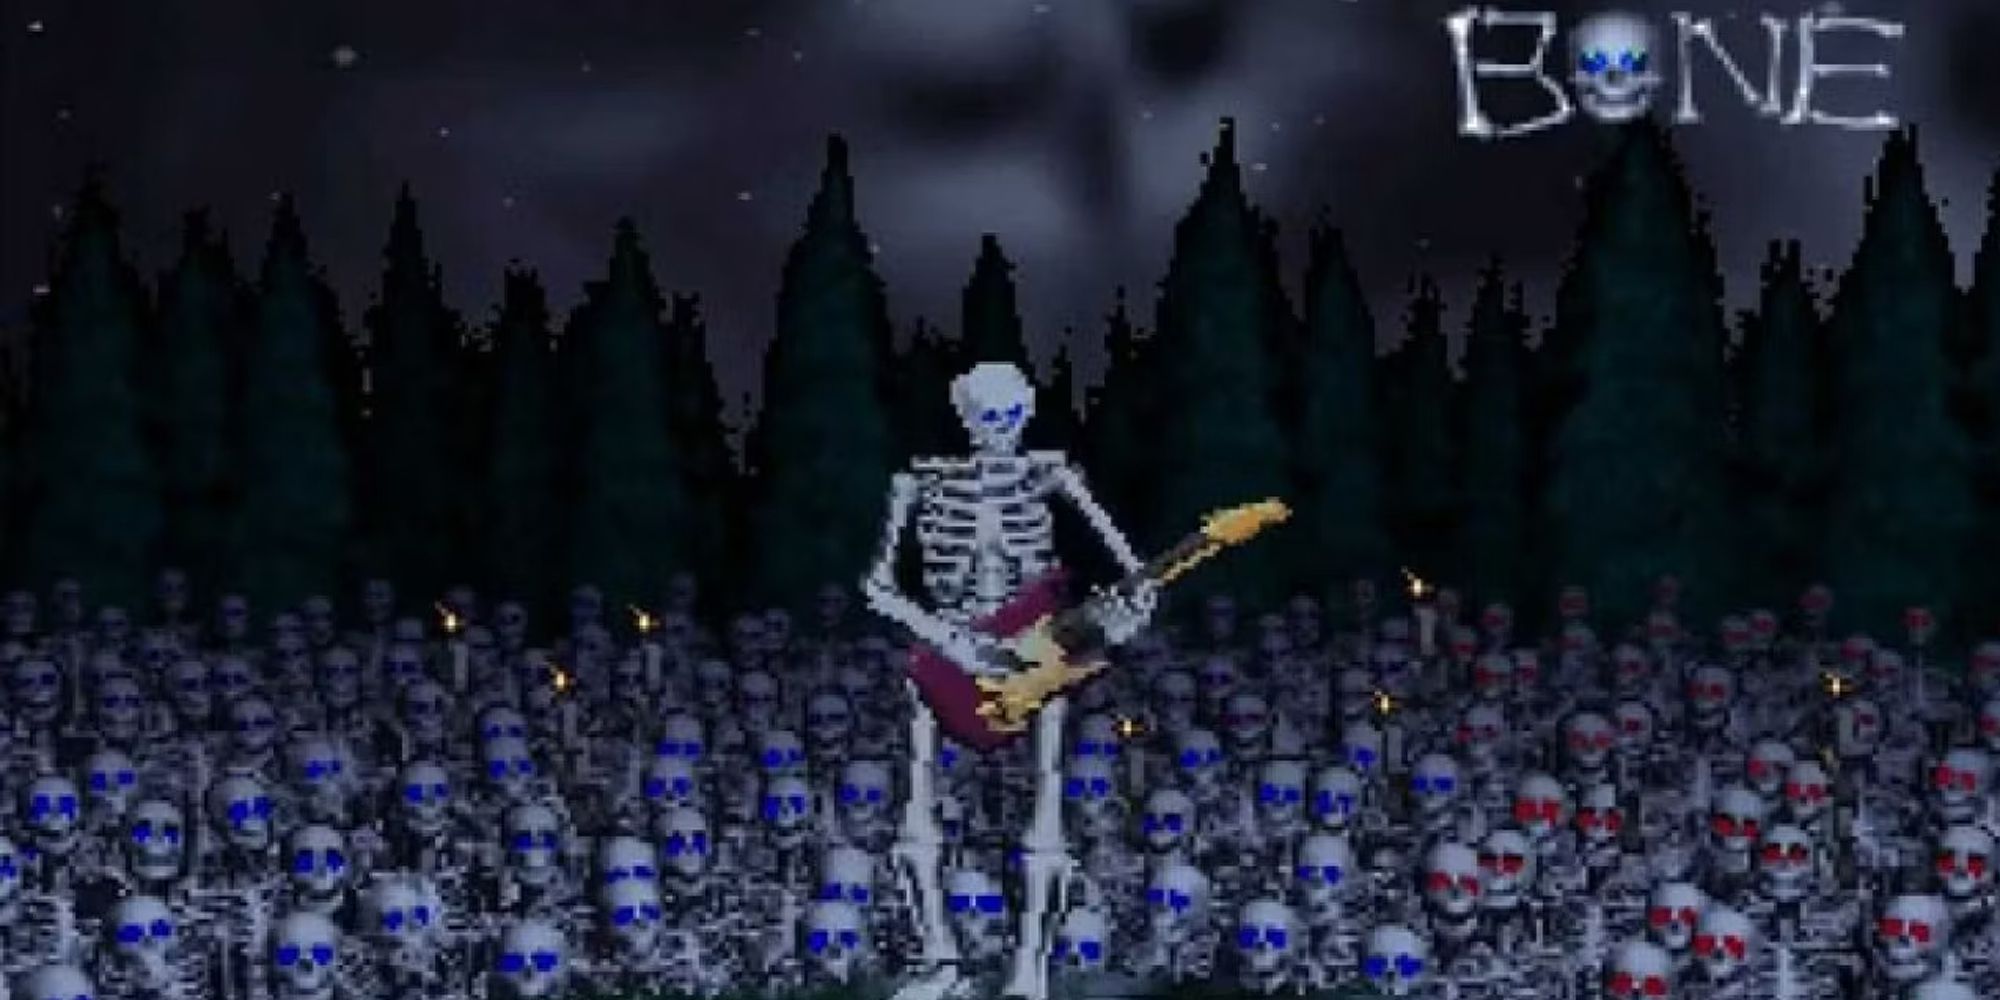 Mr Bones Performing In Front Of A Skeleton Crowd